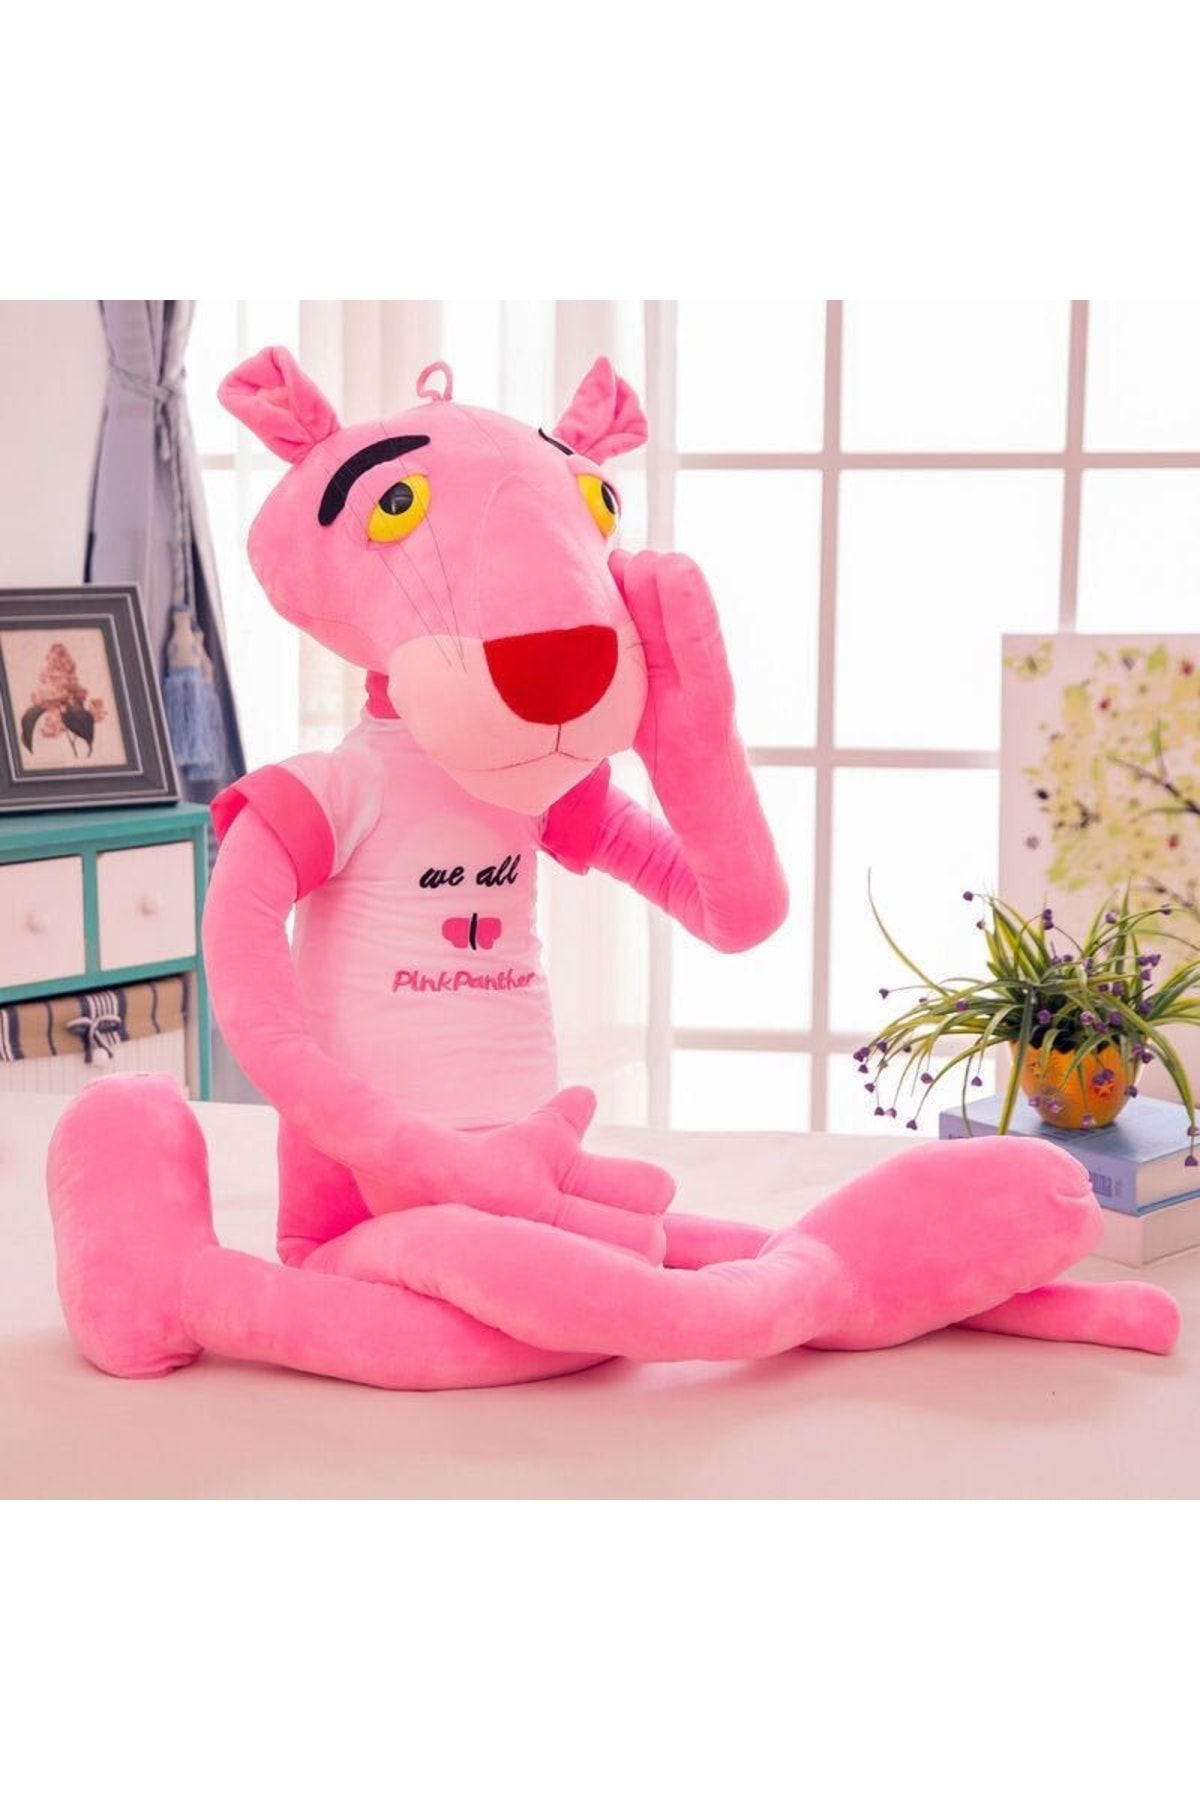 e-life Ithal Kumaş Efsane The Pink Panther Pembe Panter Aksiyon Figür Tişörtlü Peluş Oyuncak 80 Cm